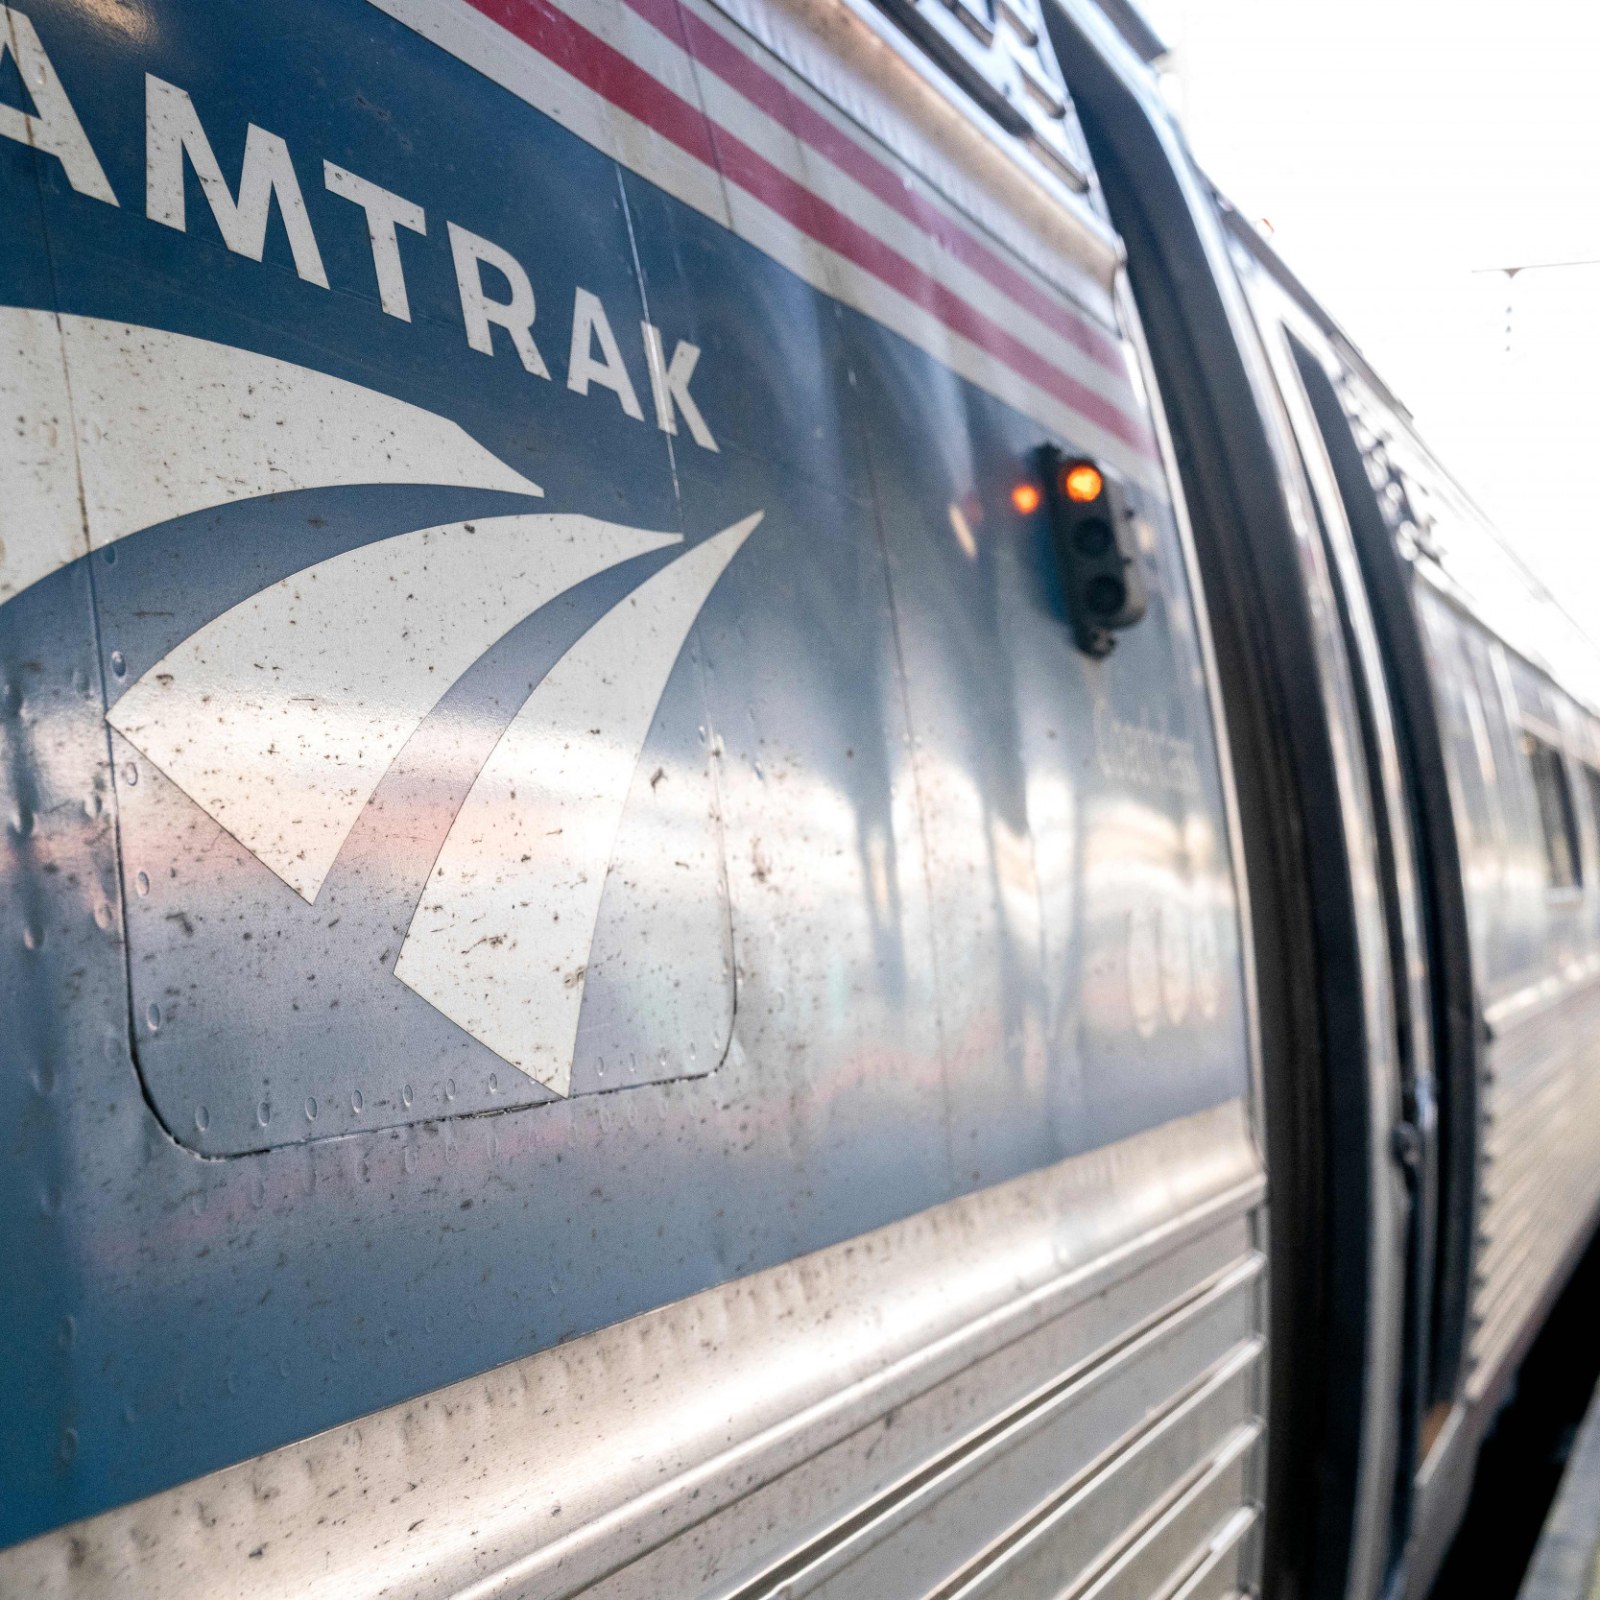 Photos of Amtrak Derailment Show Train Flipped After Dump Truck Collision